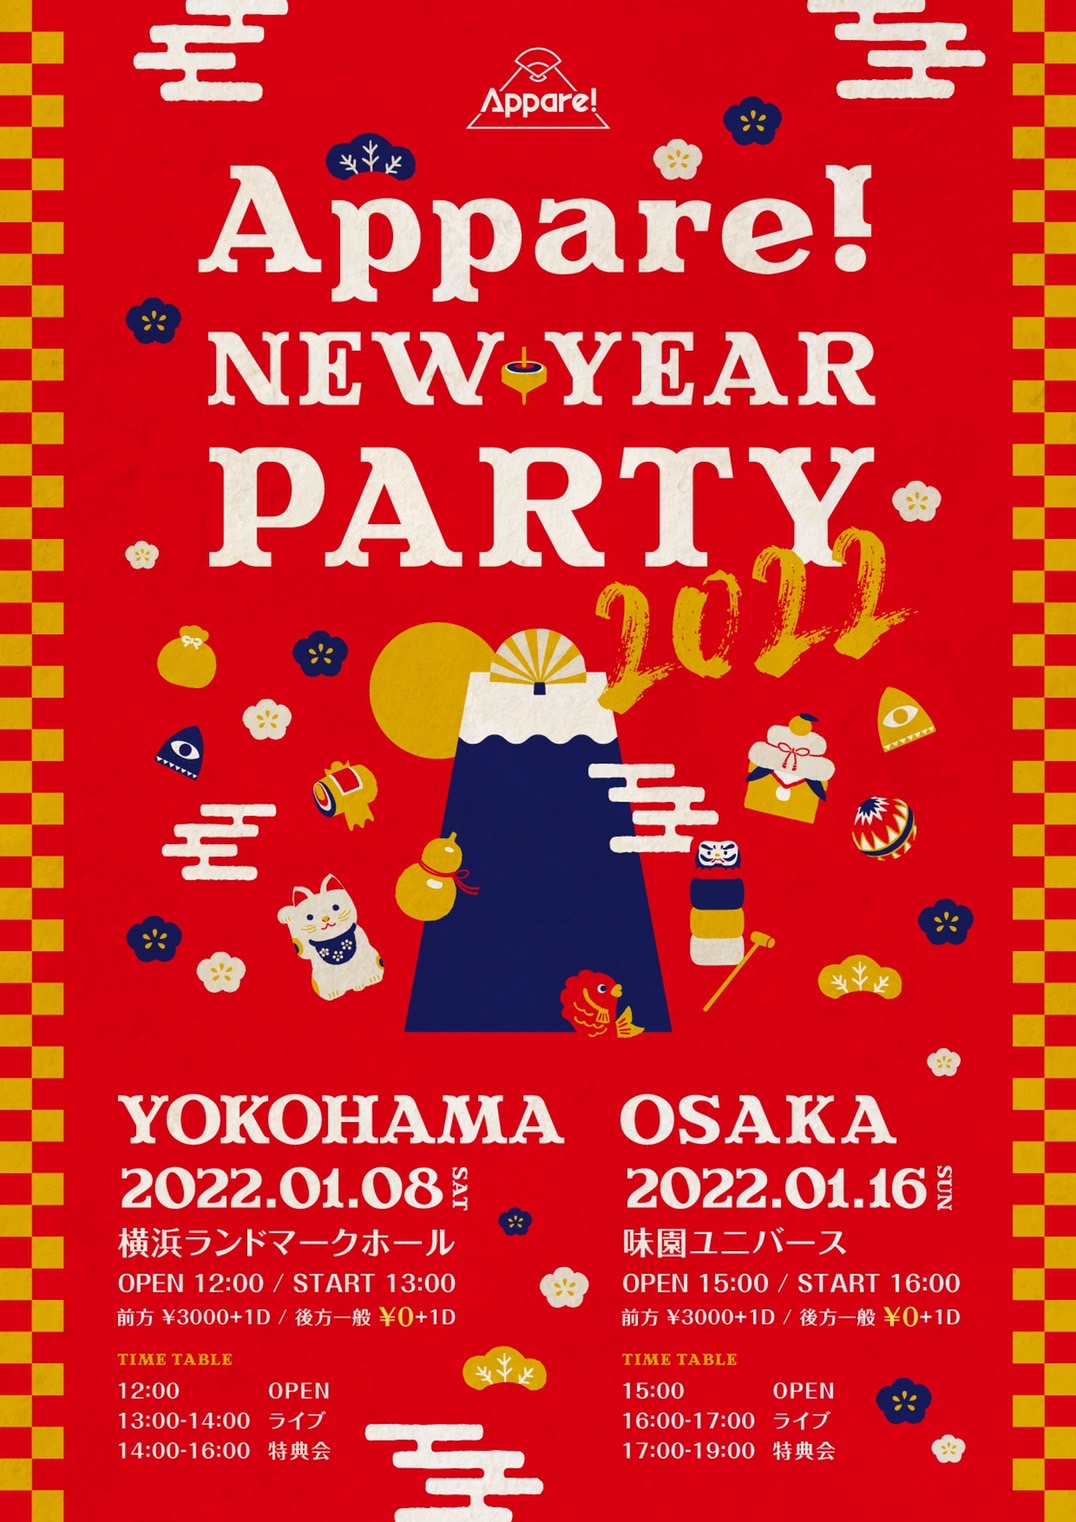 Appare!NEW YEAR PARTY2022 -OSAKA-